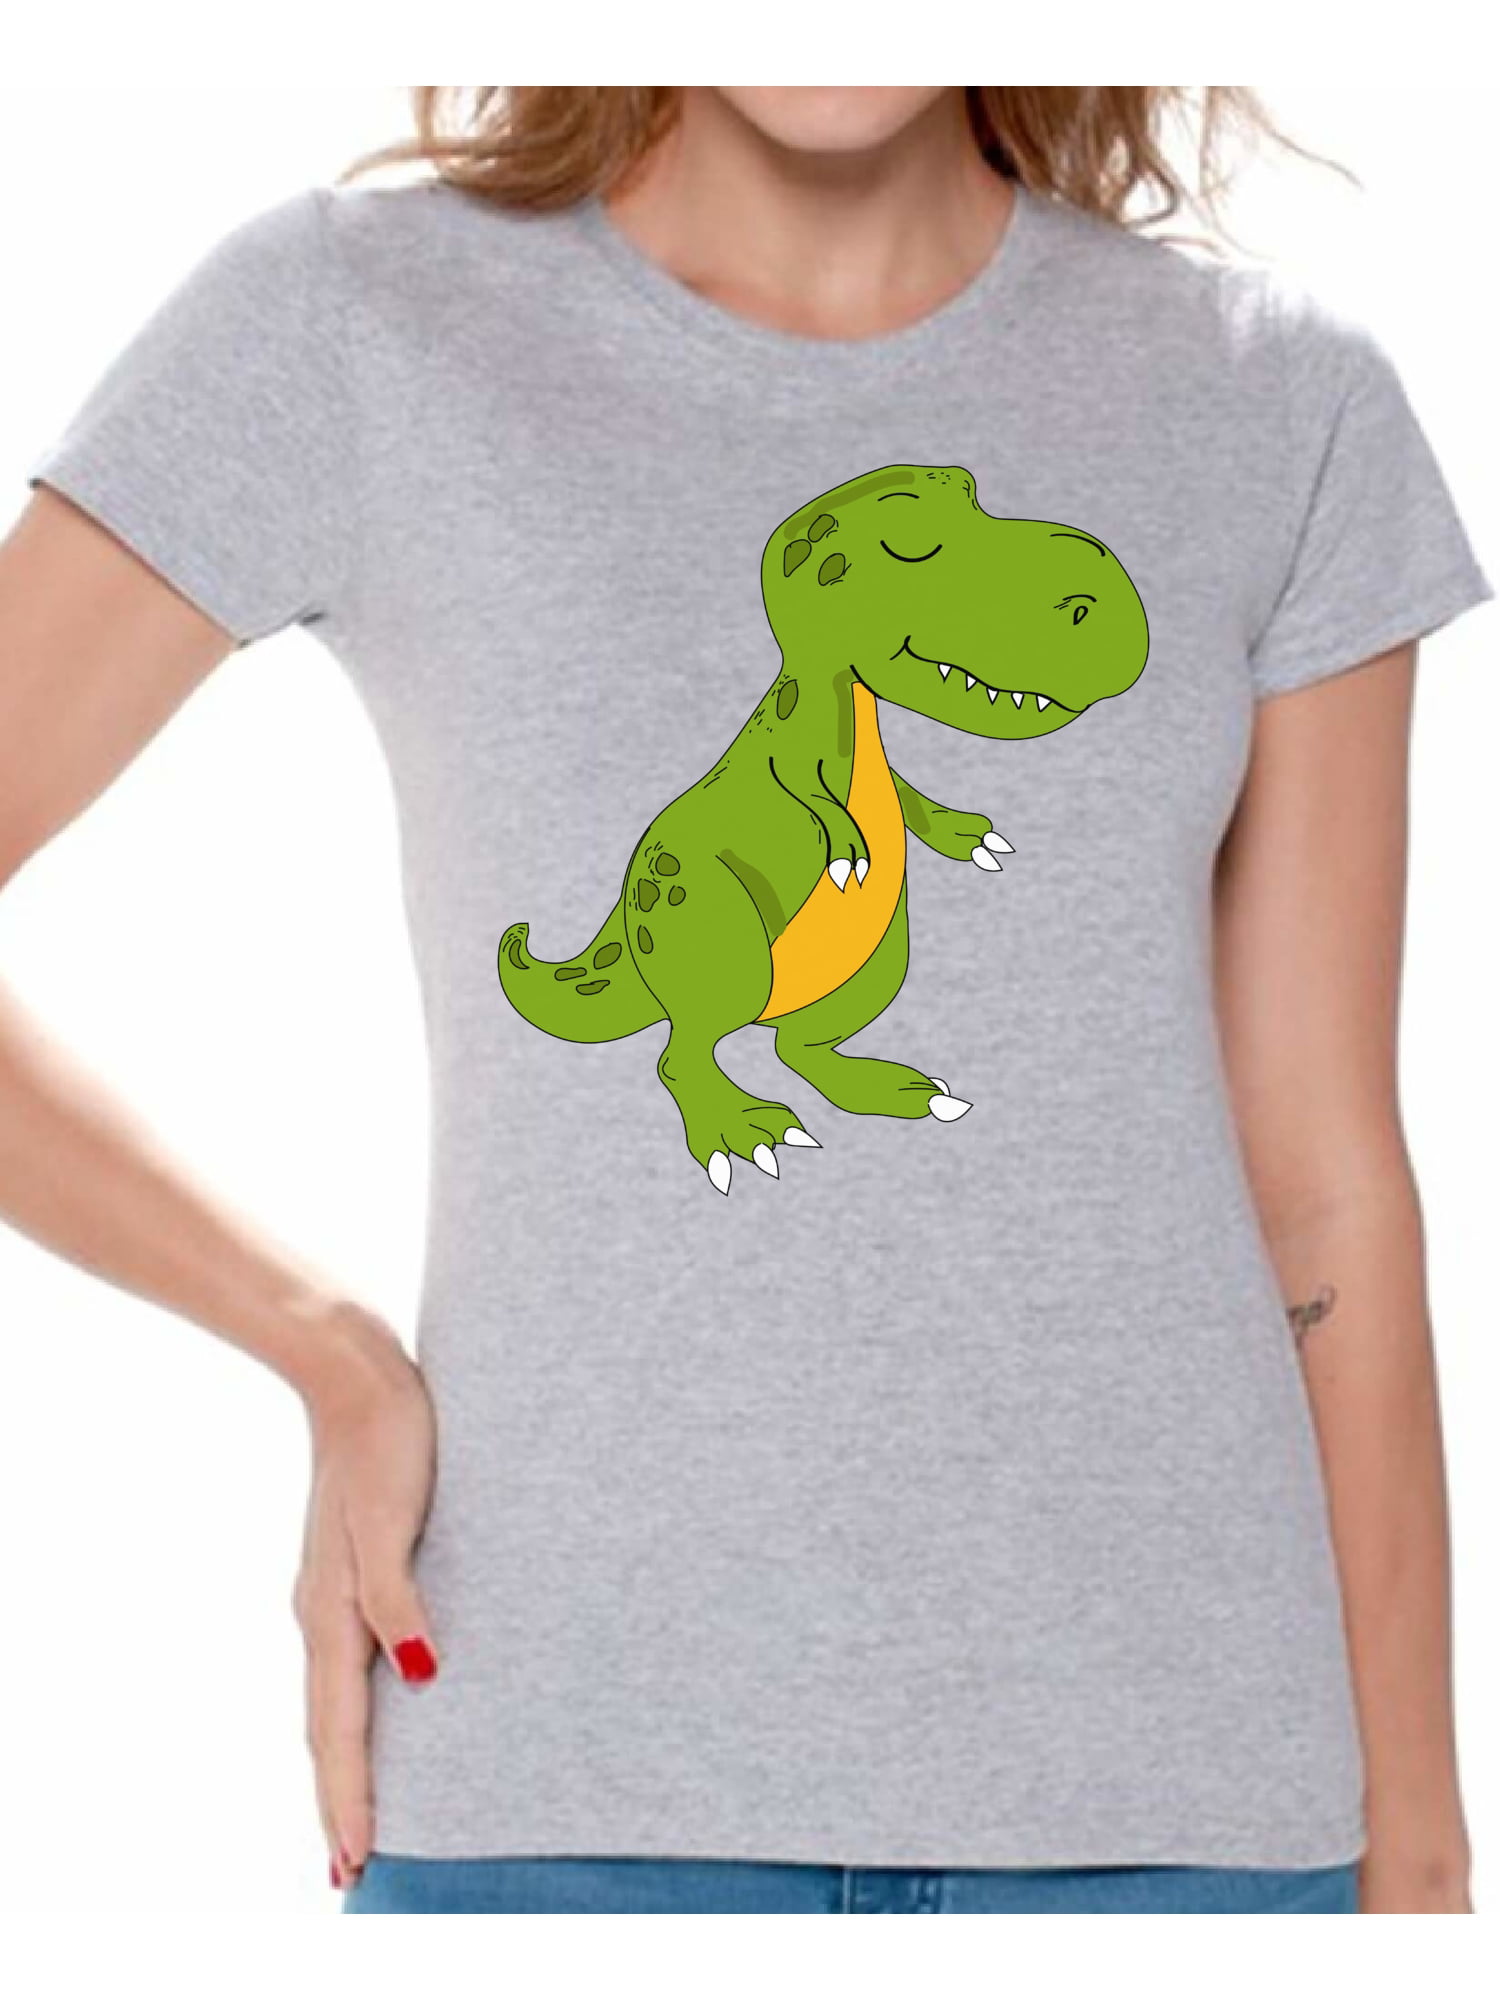 Dinosaur Tshirt for Women Tyrannosaurus Rex Dinosaur Gifts for Her.